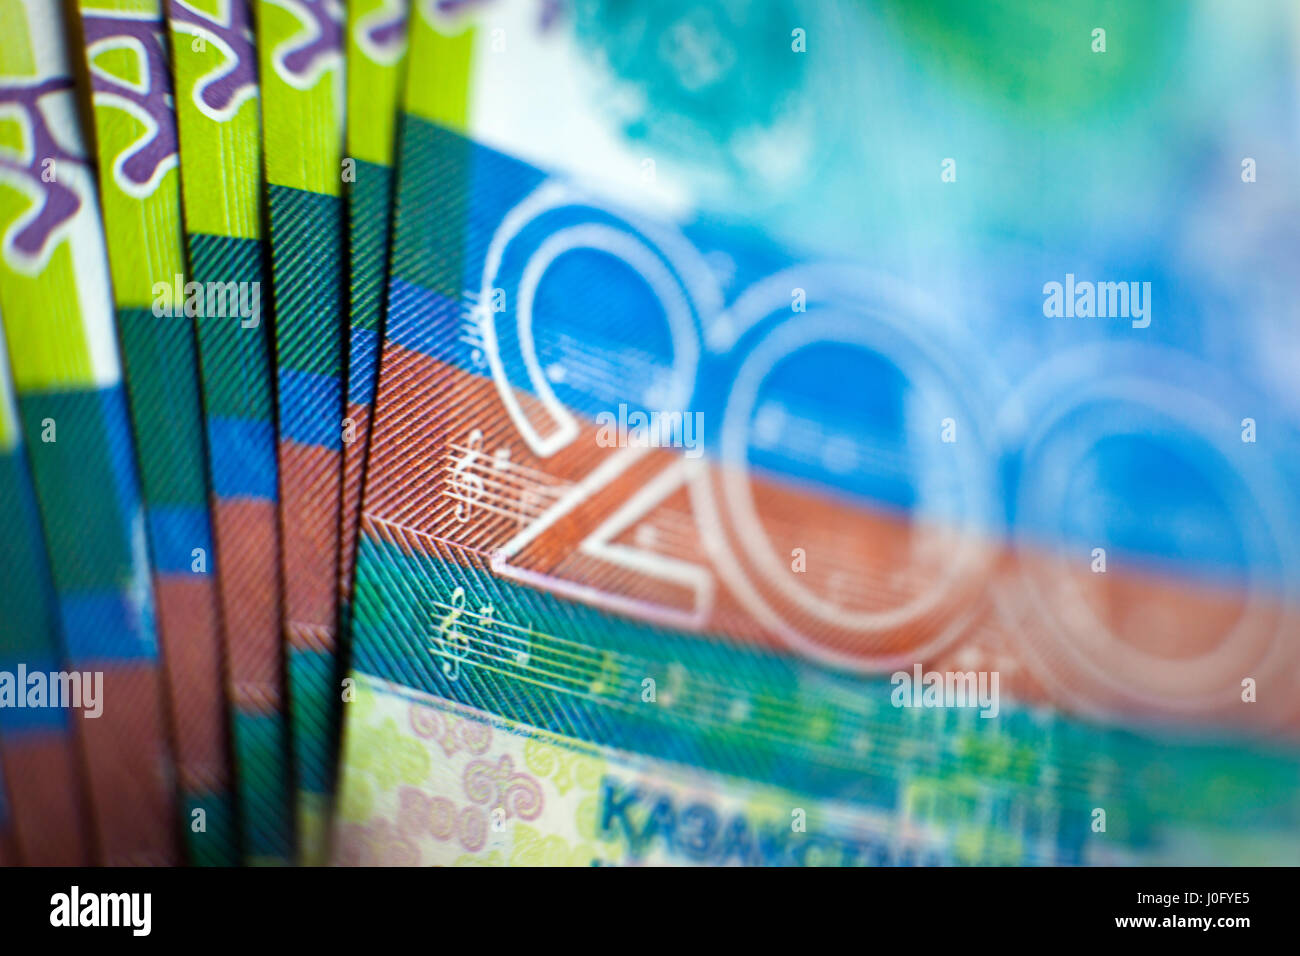 Kazakhstan money, close-up. Denominations of two hundred tenge. Stock Photo